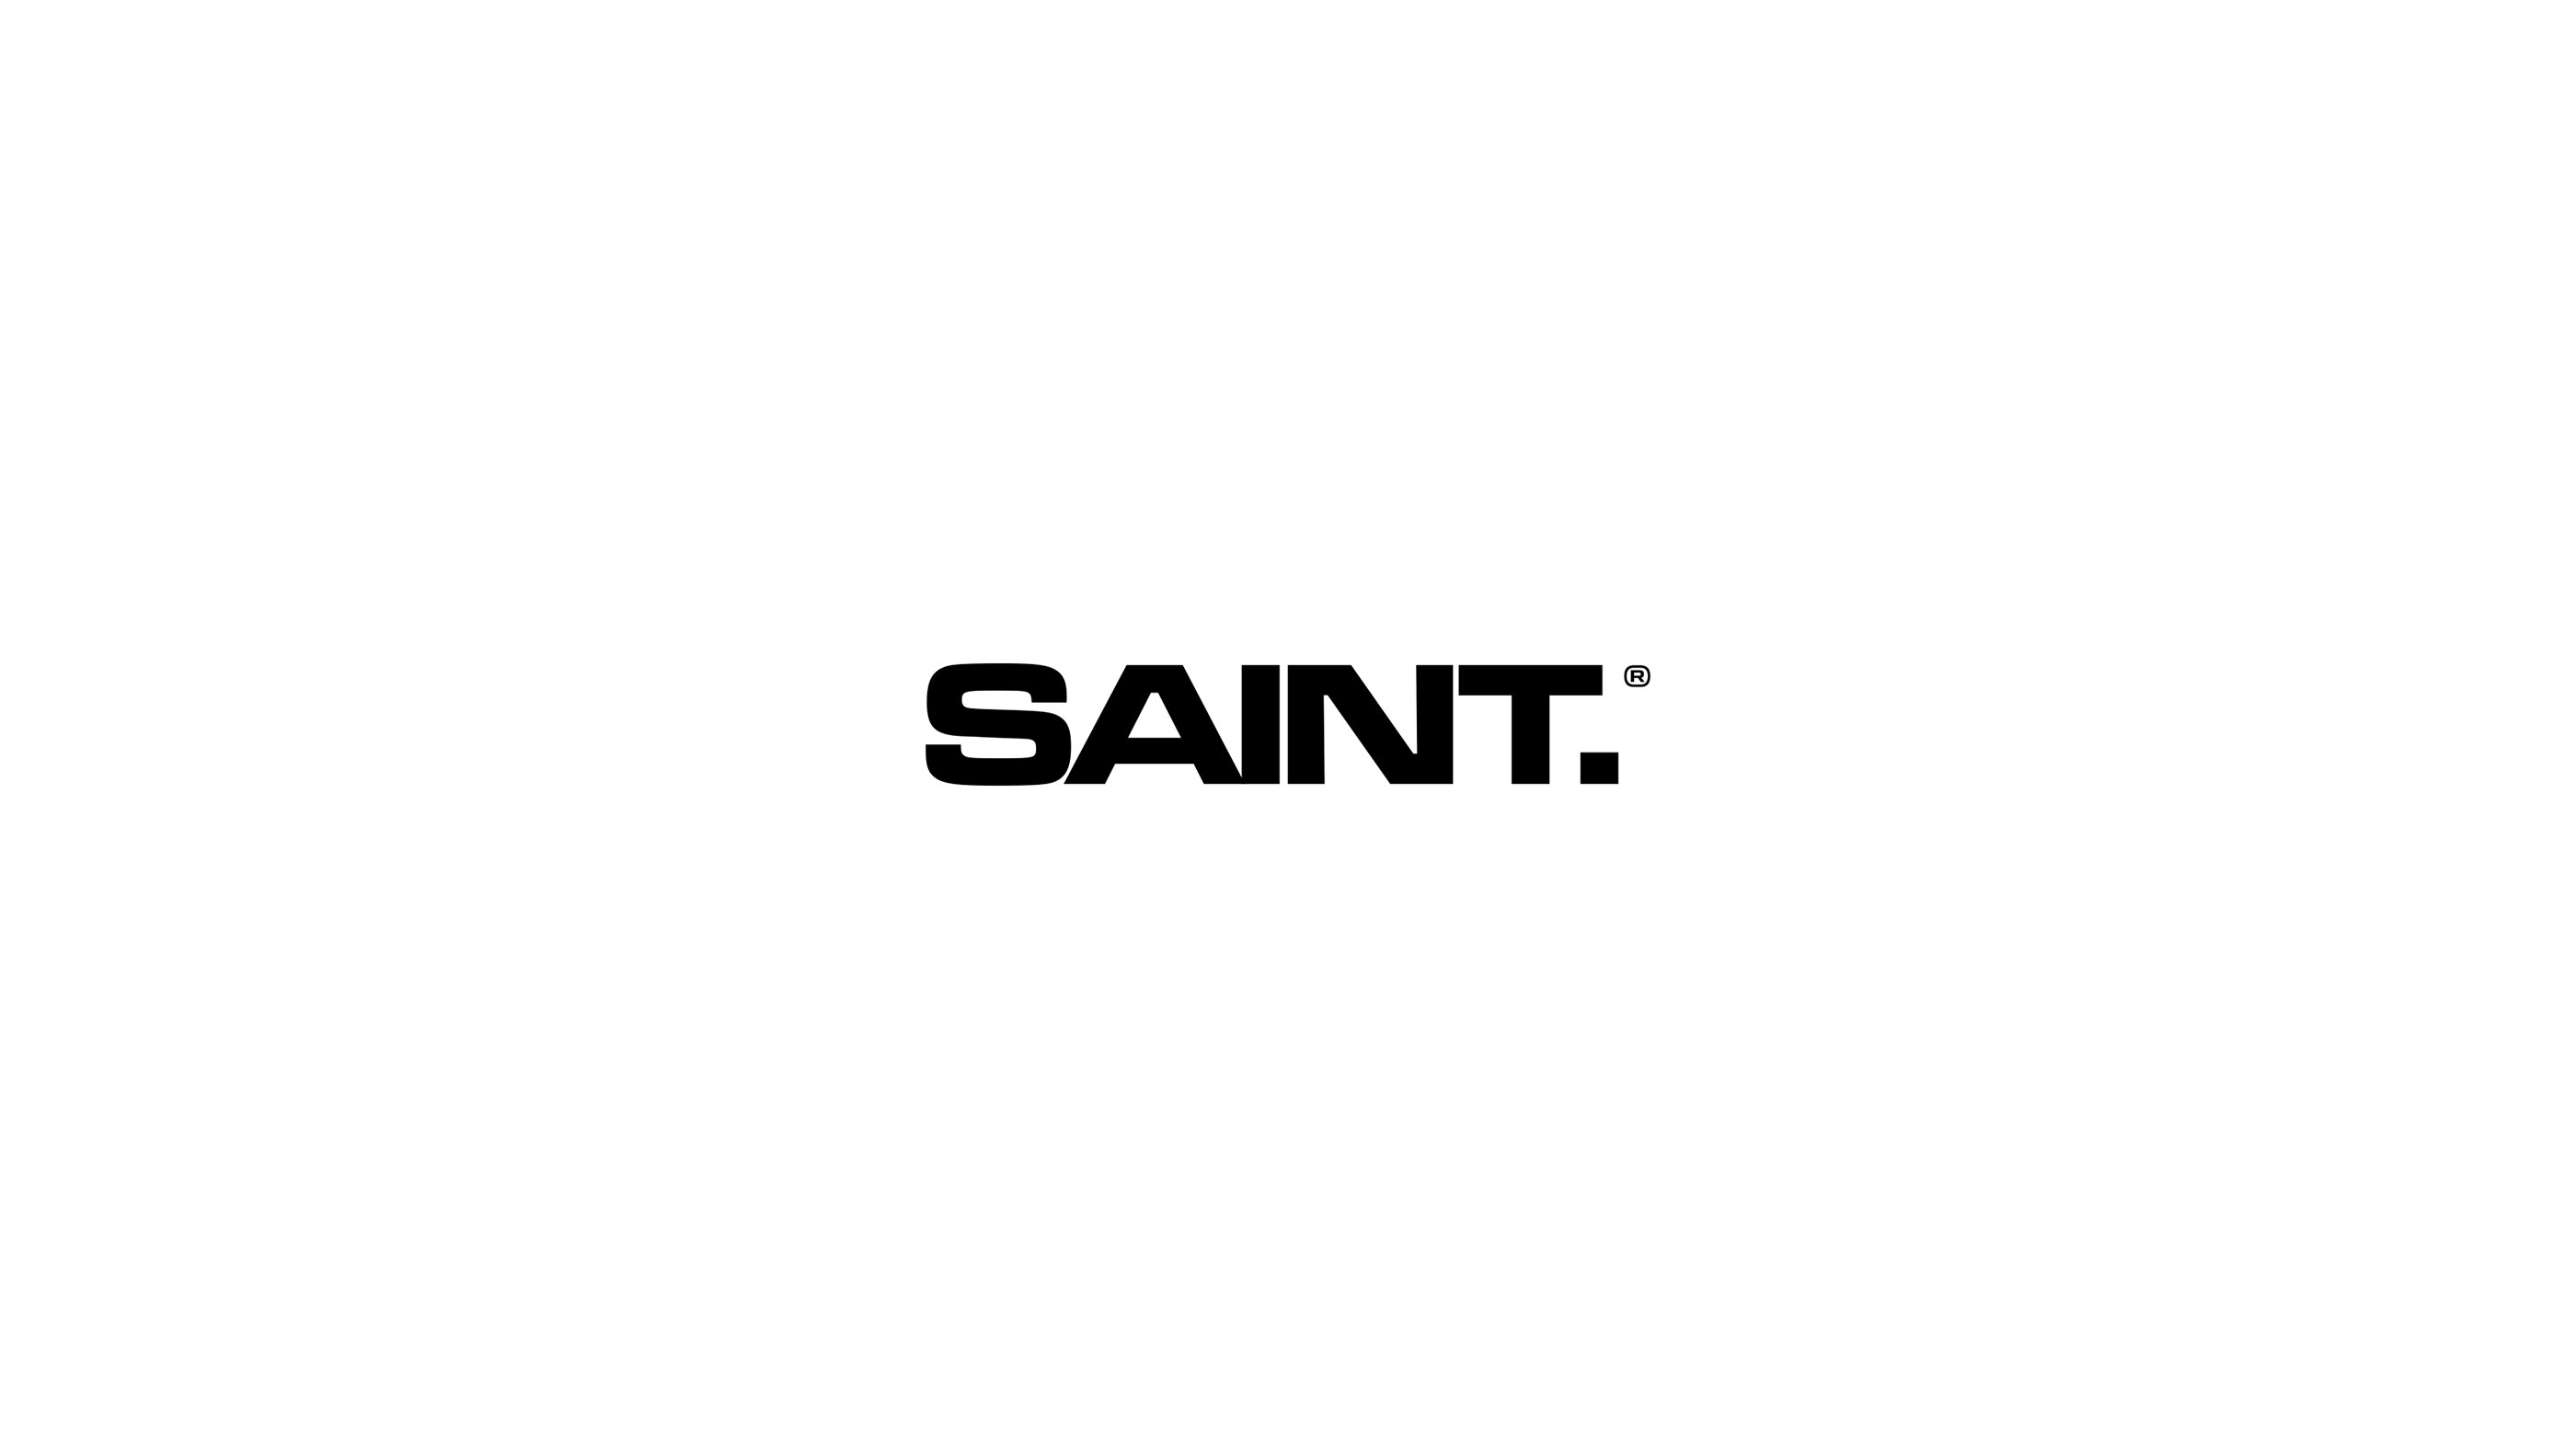 SAINT - First Block Digital Agency